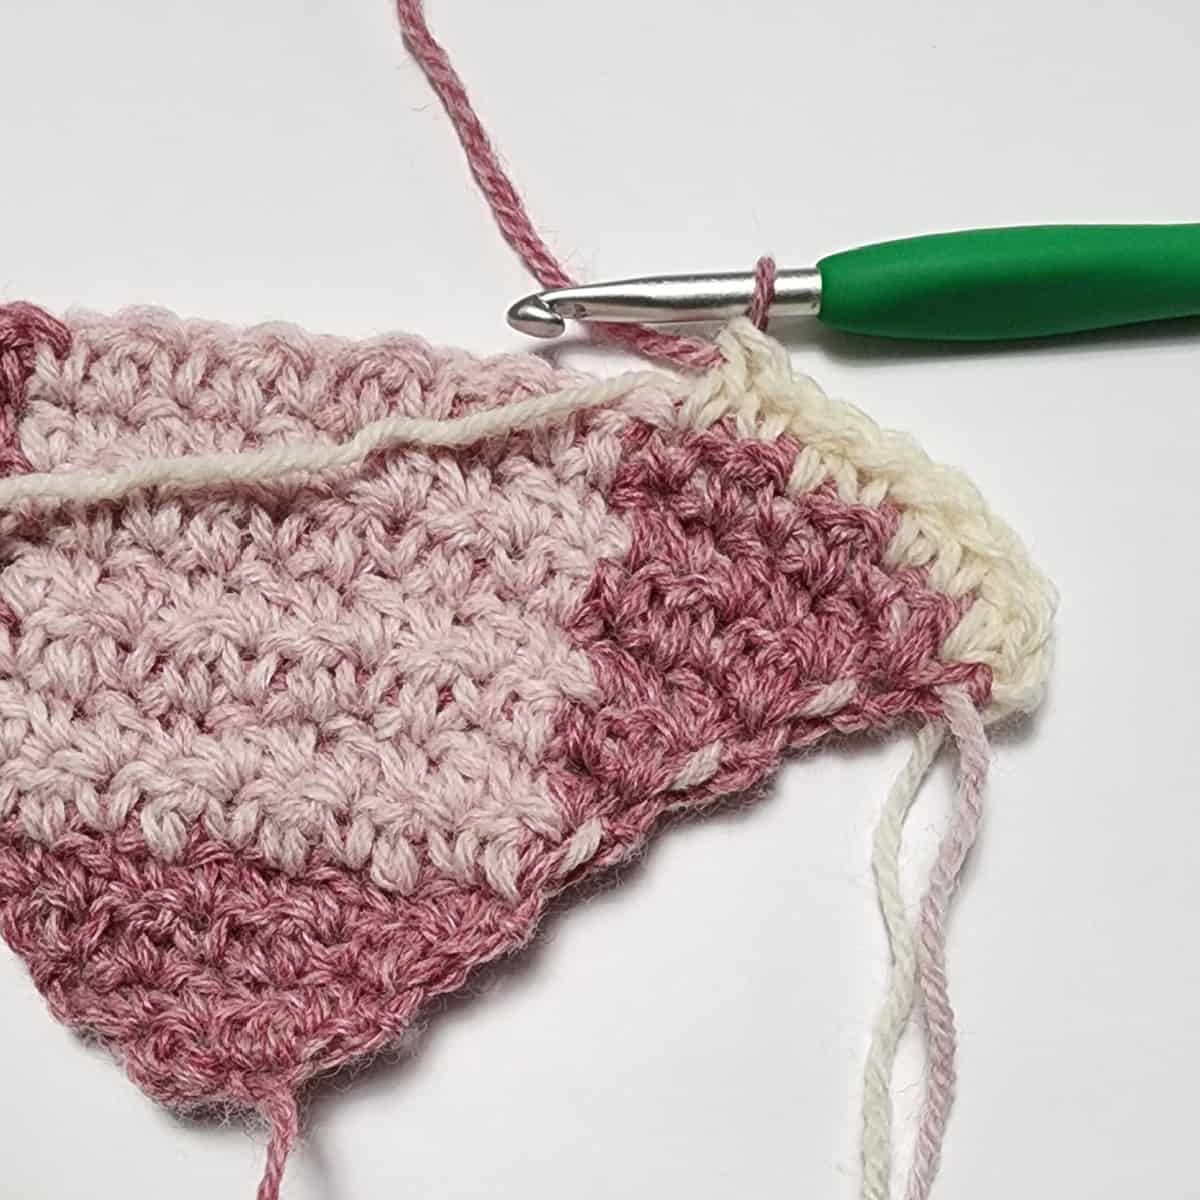 C2C Crochet Buffalo Plaid Blanket - A Crocheted Simplicity